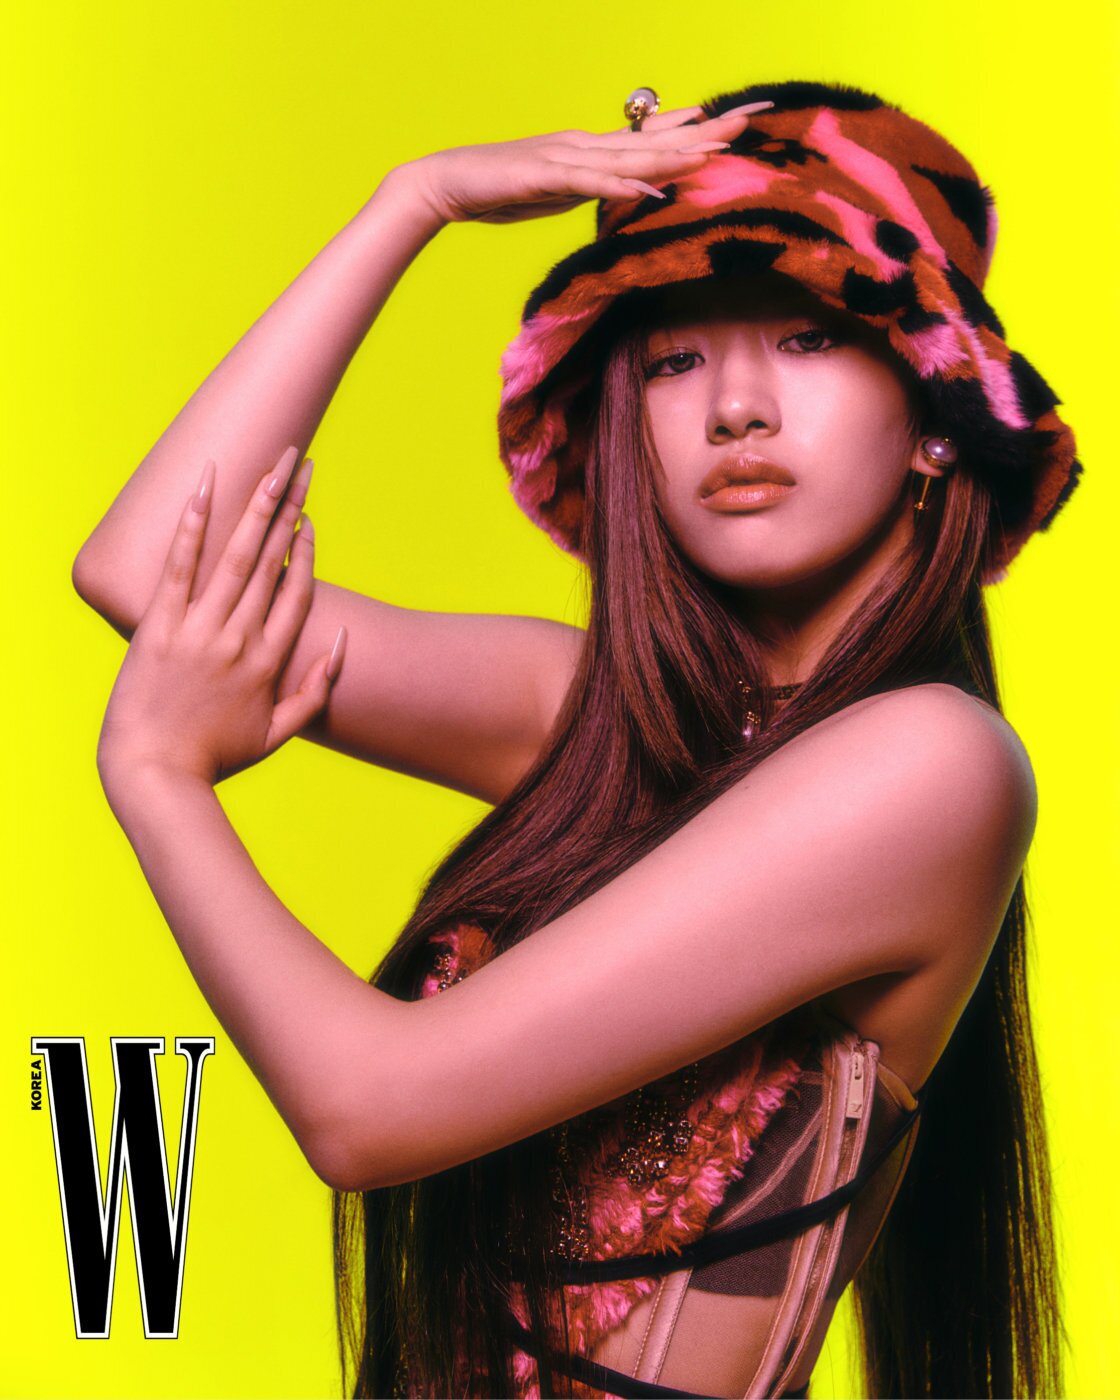 IVE's Yujin joins 'Versace's global 2022 spring/summer campaign